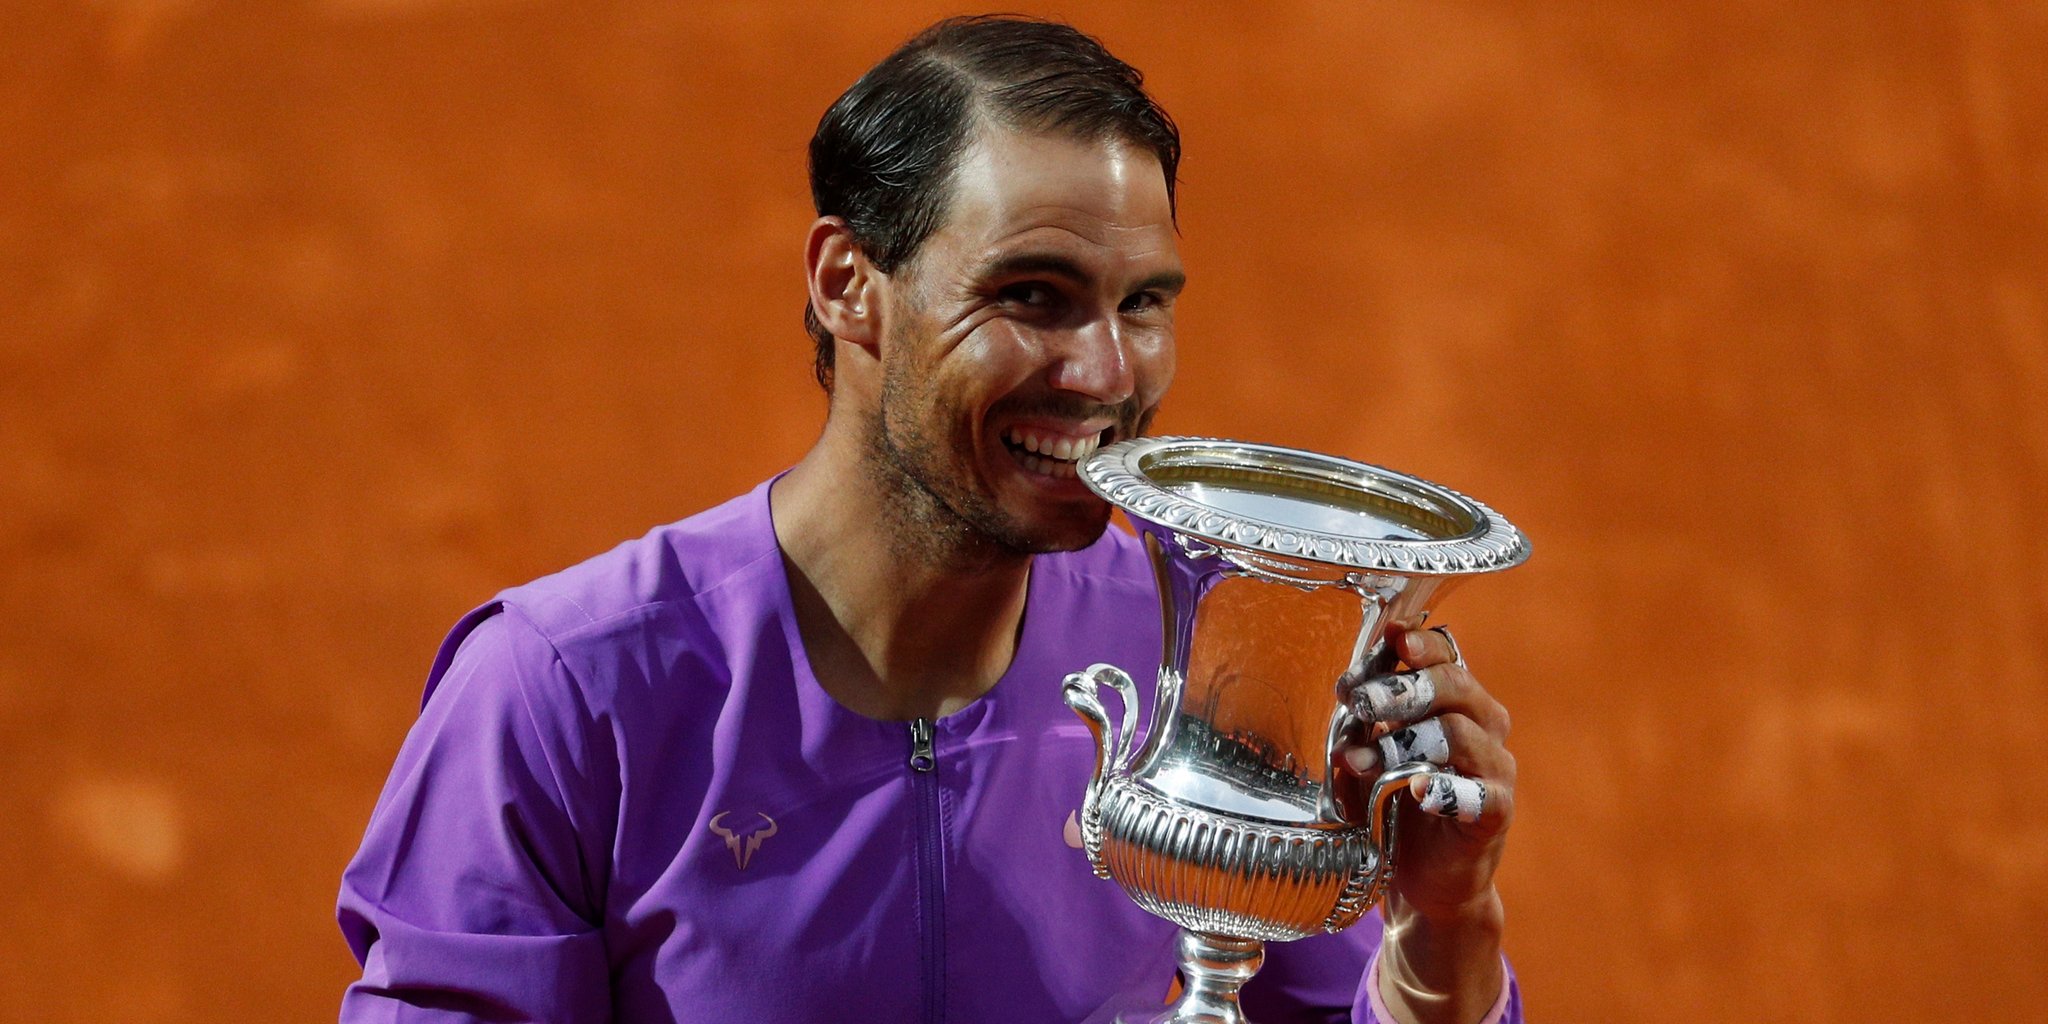 Italian Open 2021 Final 'King of Clay' Nadal defeats Novak Djokovic